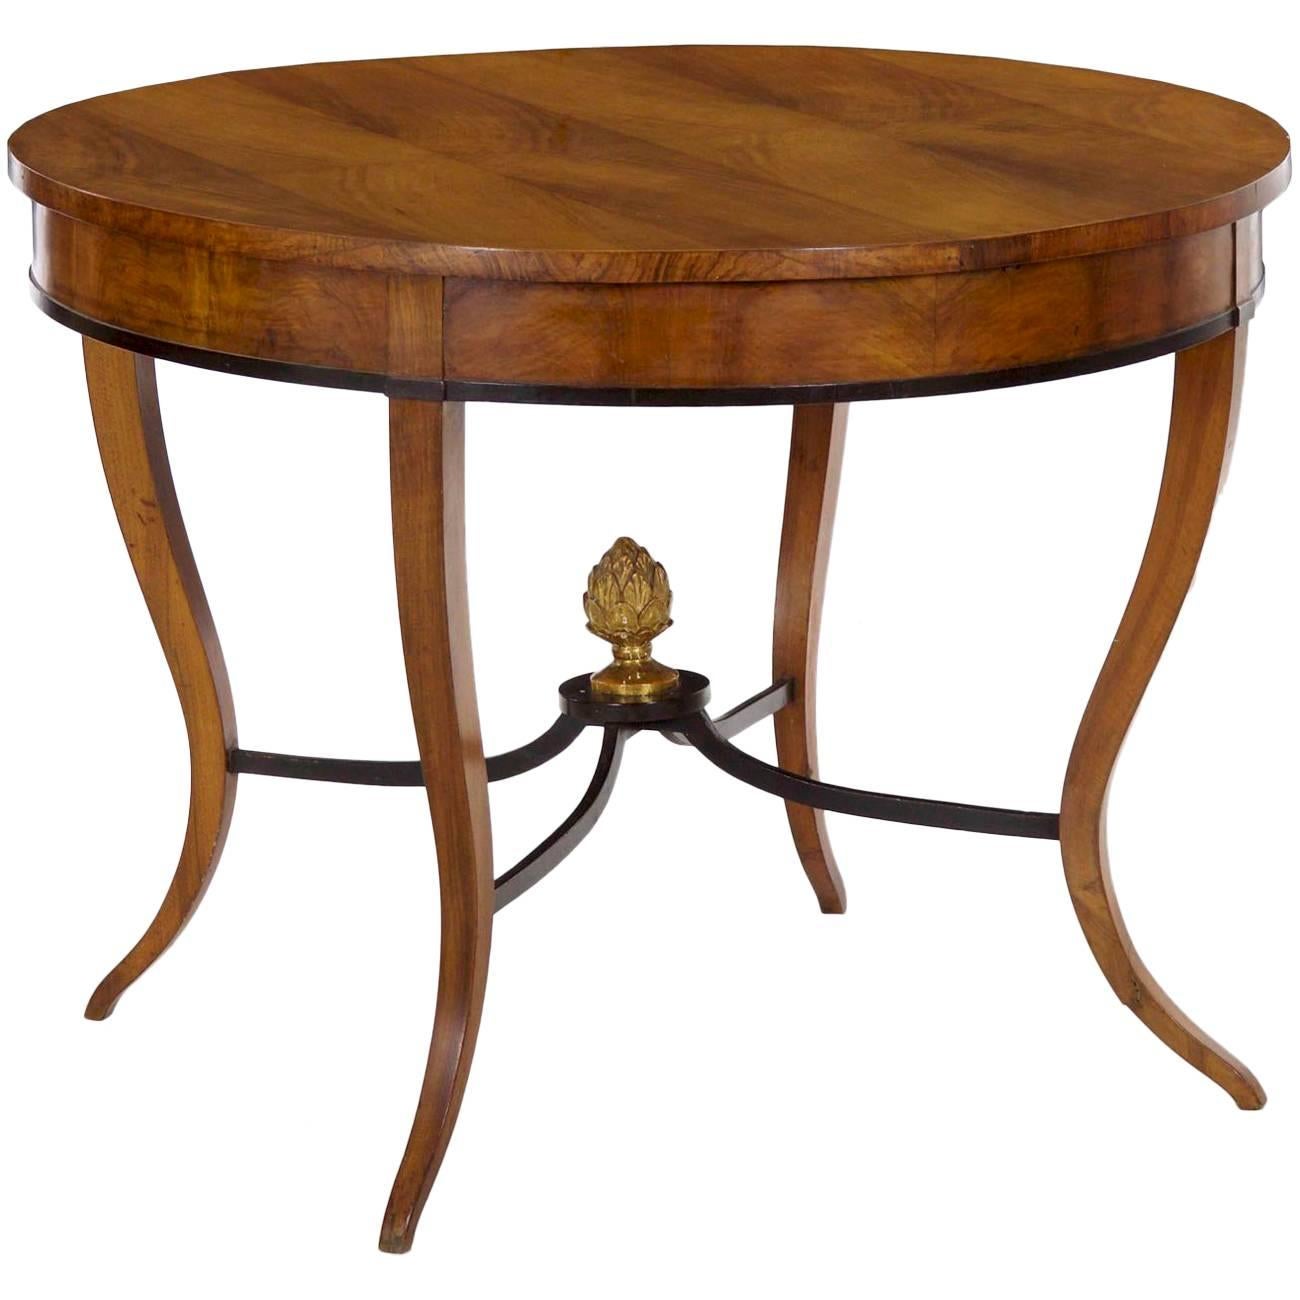 Antique Austrian Biedermeier Round Fruitwood Centre Table, circa 1825